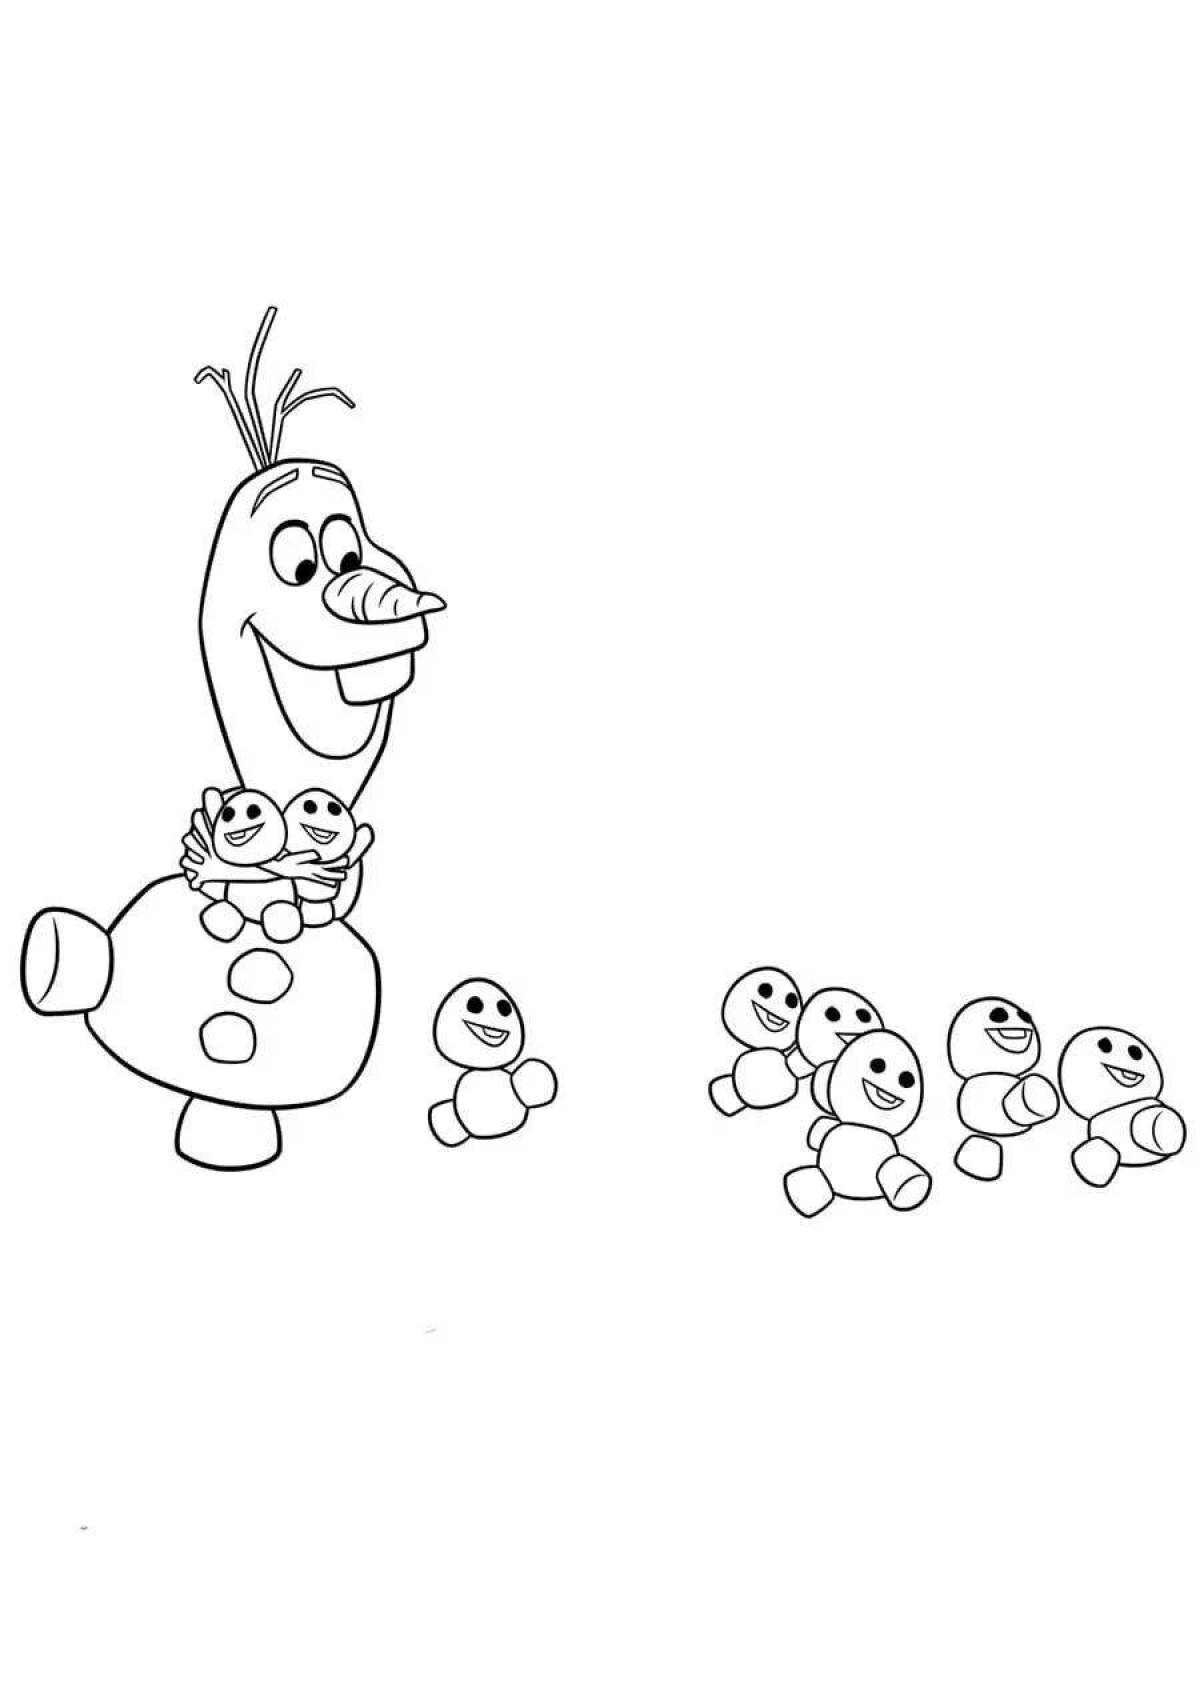 Olaf's adorable snowman coloring book